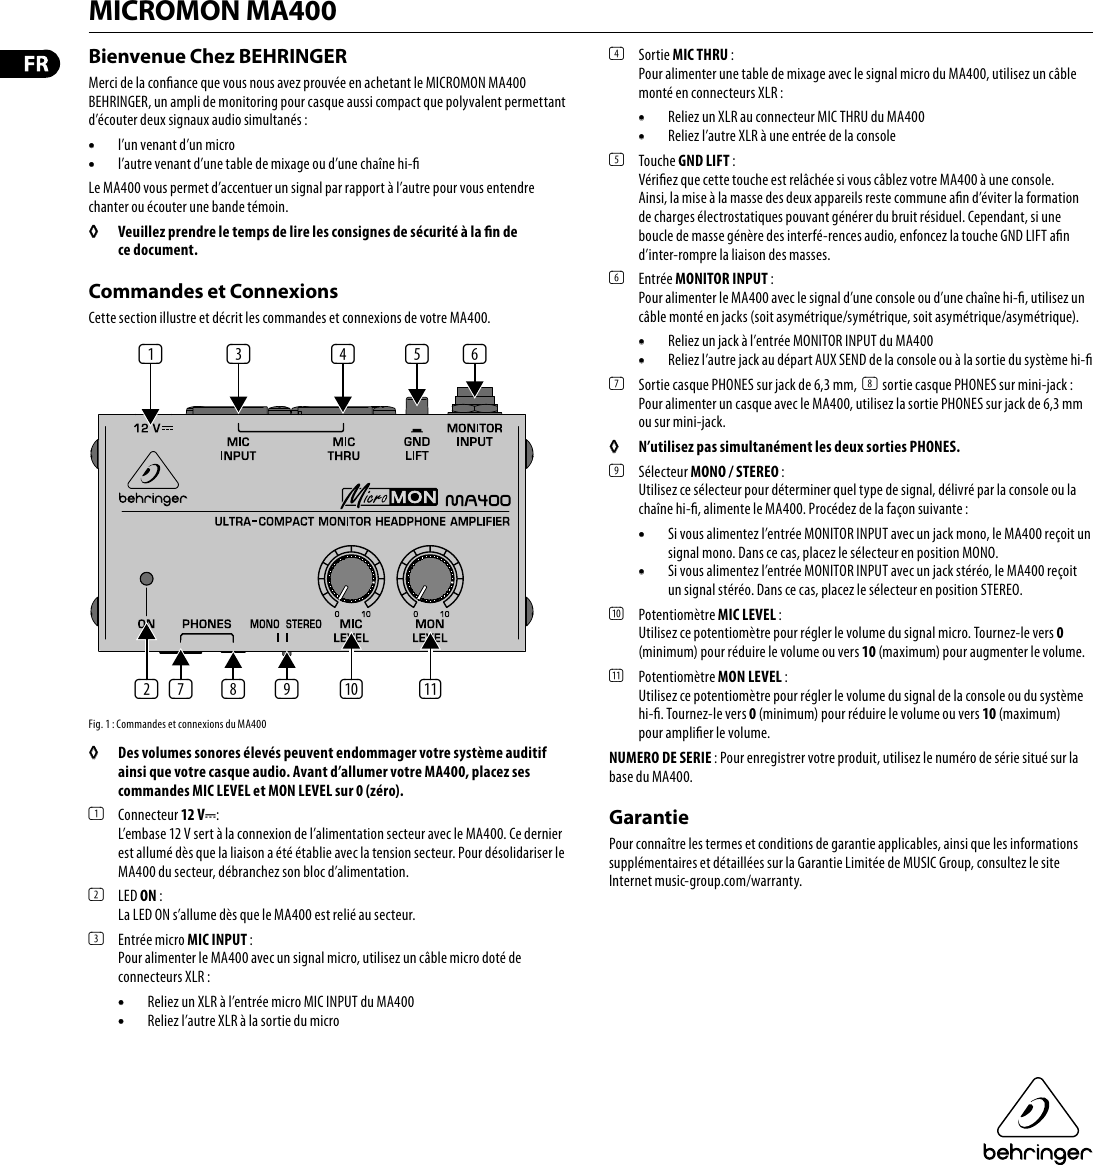 MICROMON MA400 Behringer User Manual (French) M Fr